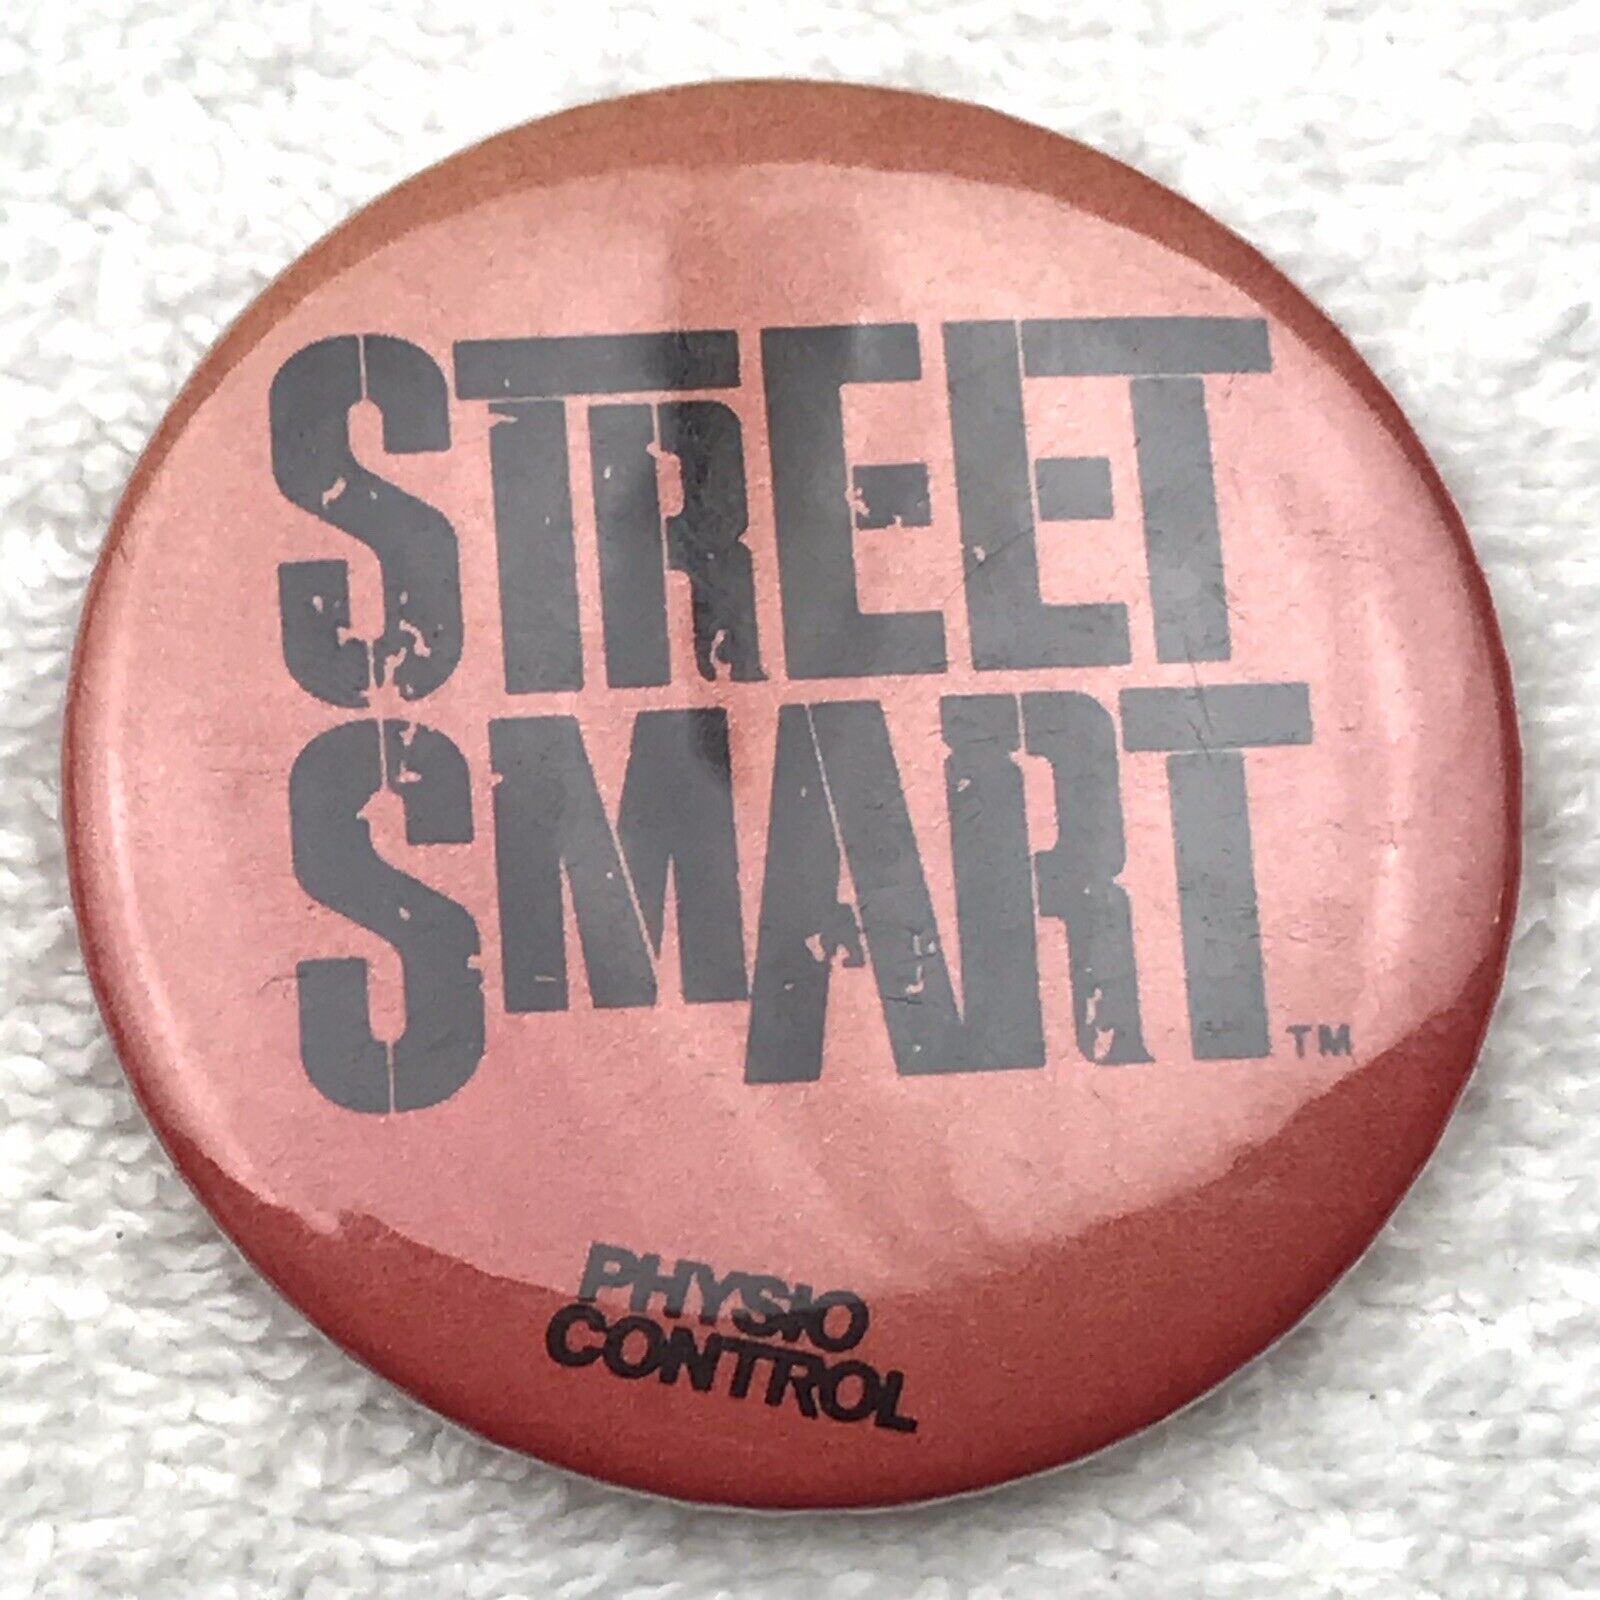 Street Smart Physio Control Vintage Pin Button Pinback